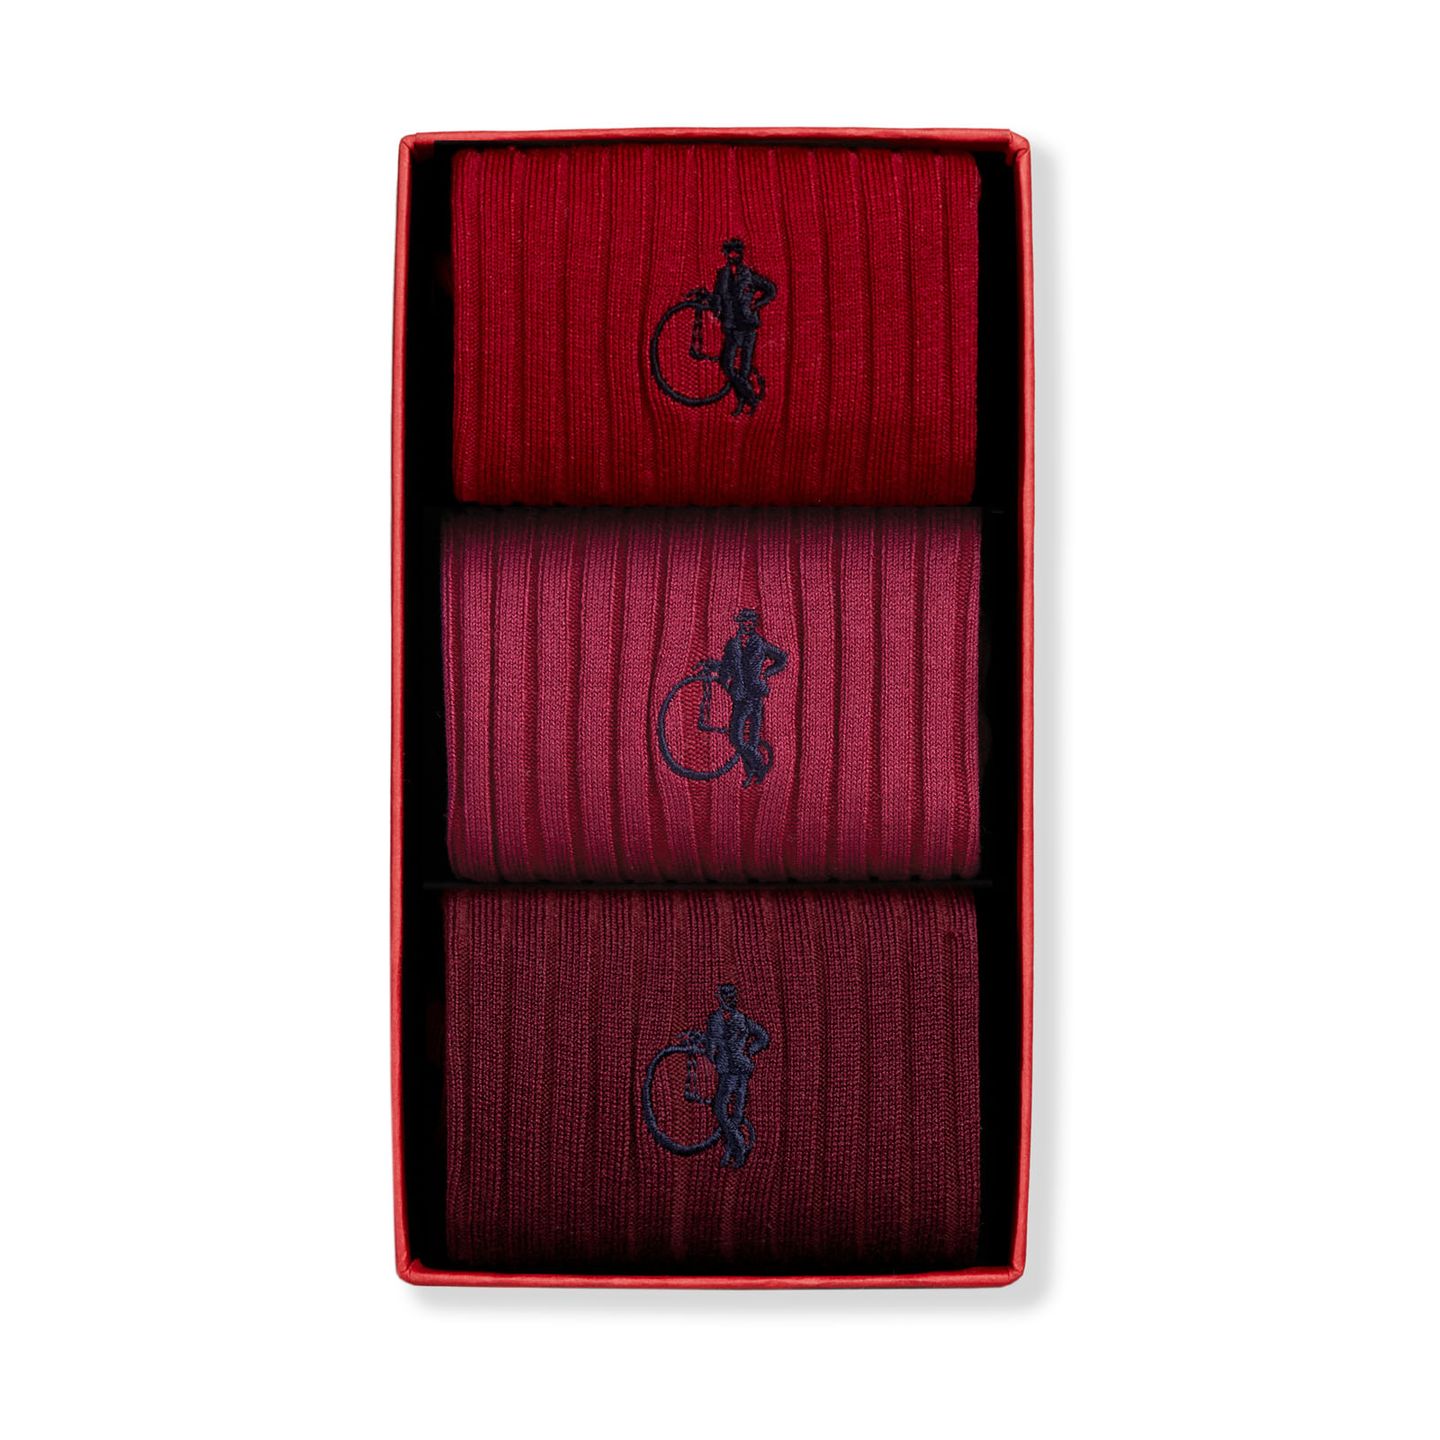 Rich red trio collection in a presentation box